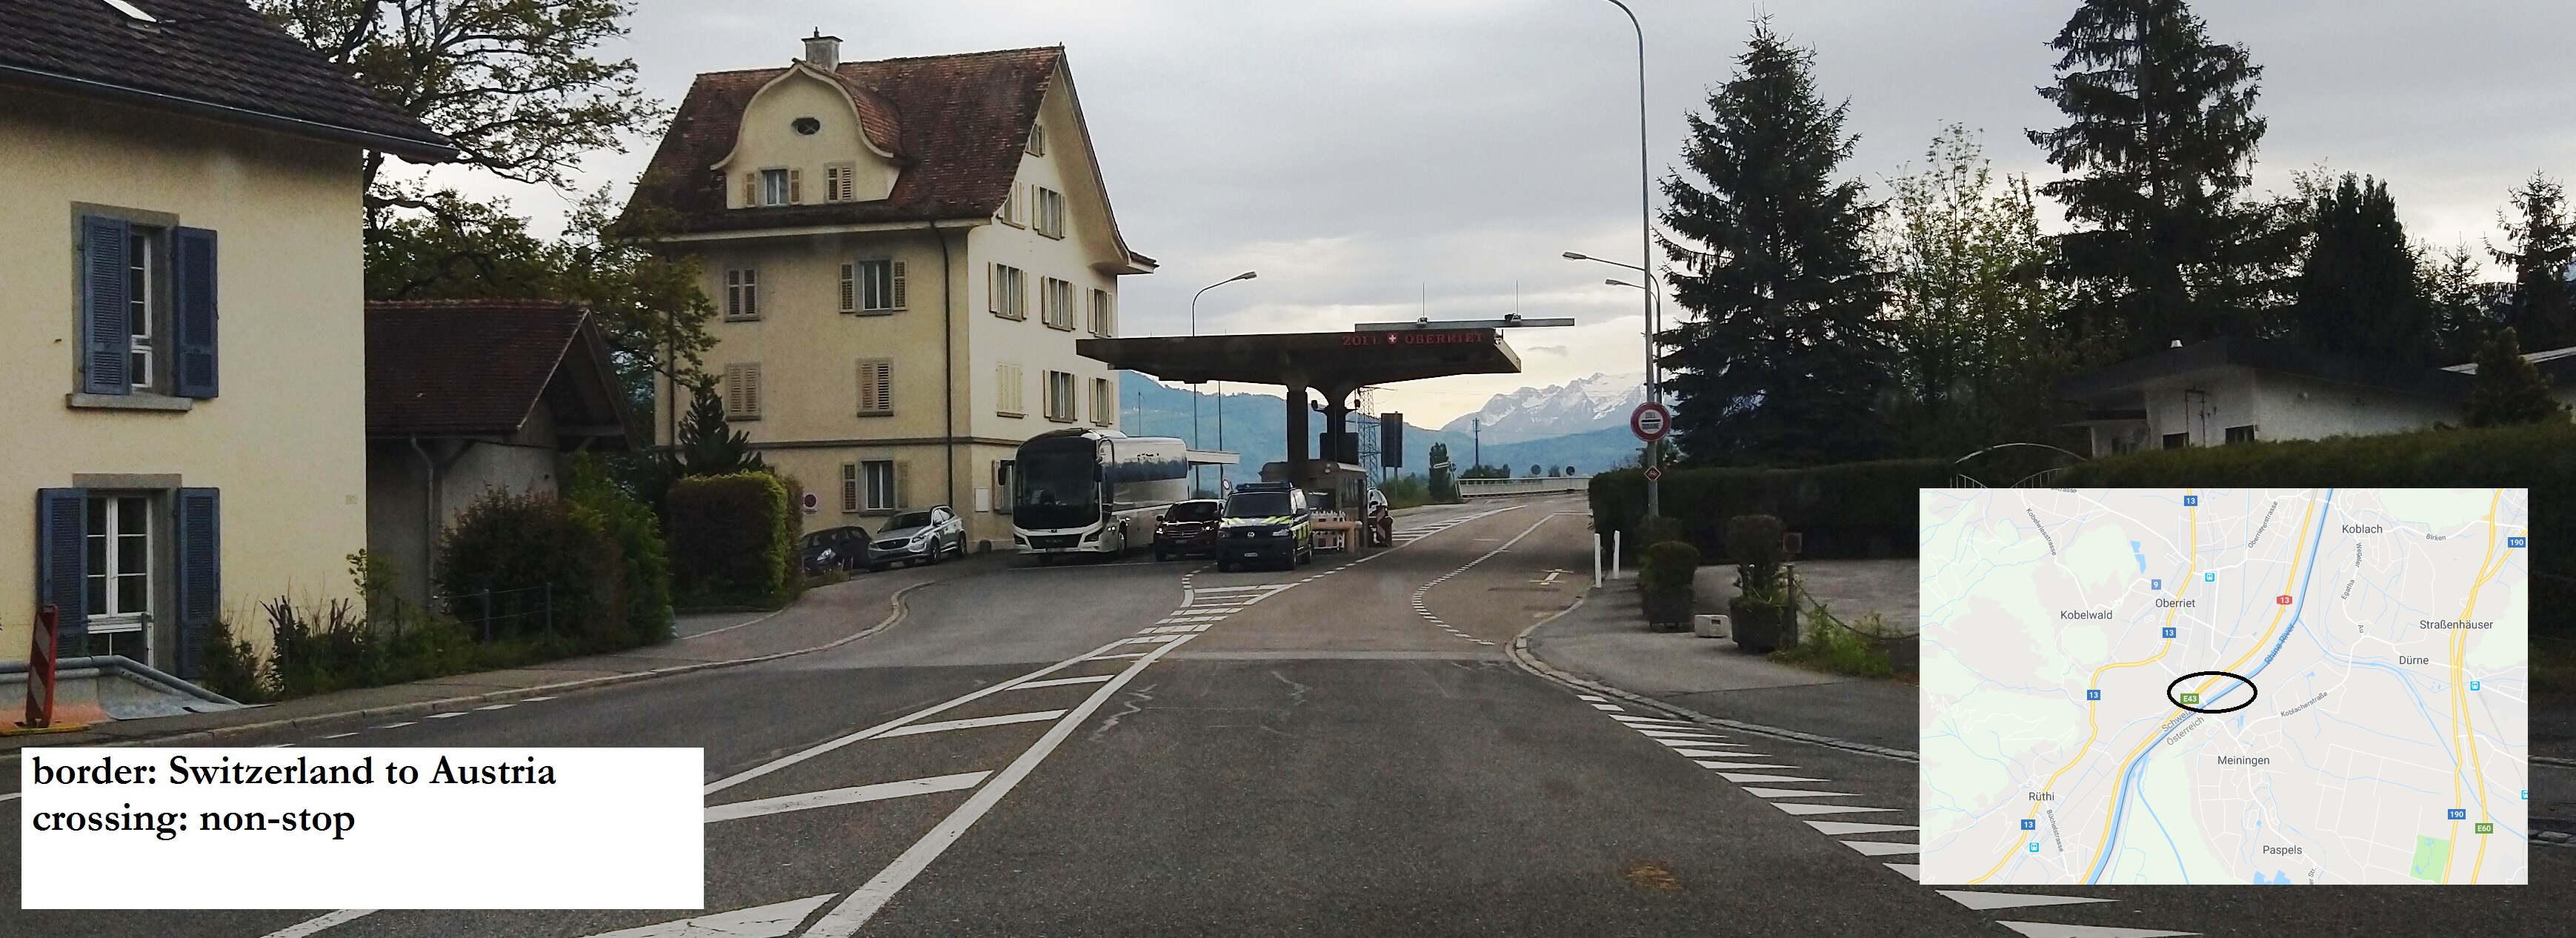 Switzerland to Austria border